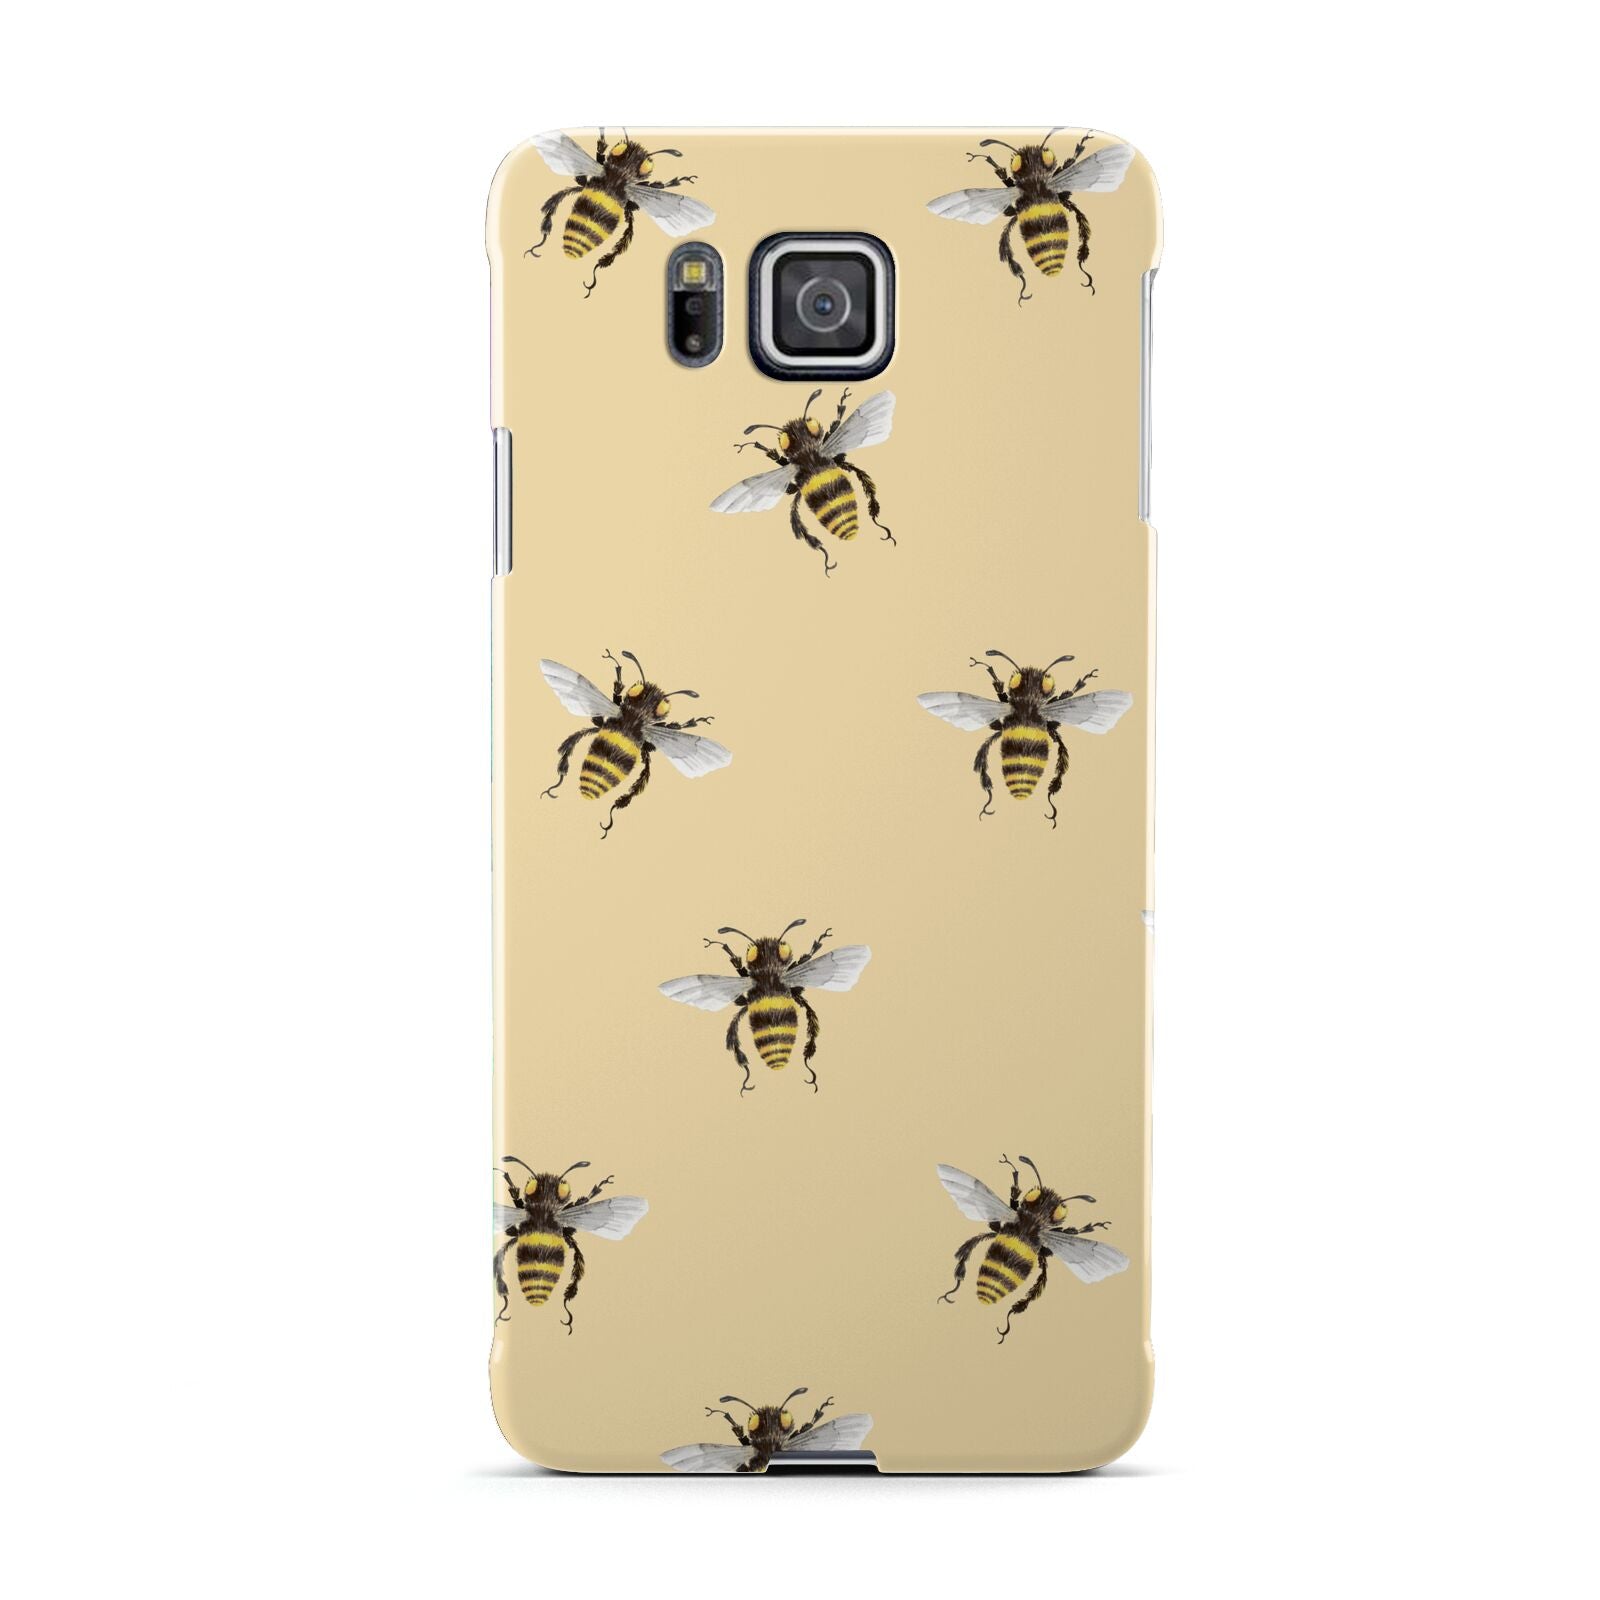 Bee Illustrations Samsung Galaxy Alpha Case